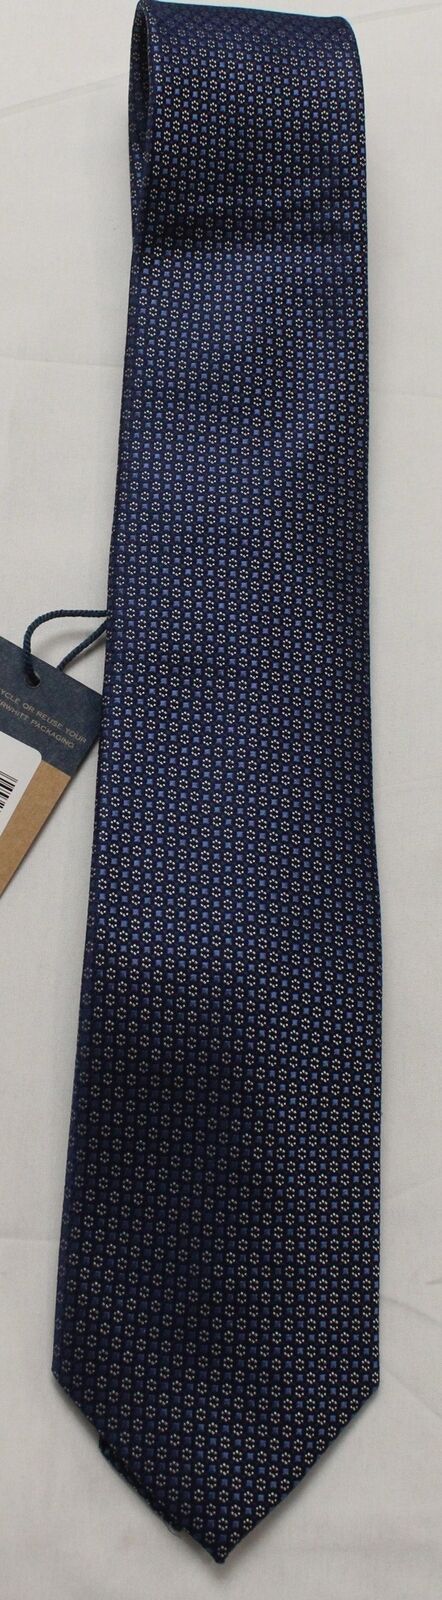 Charles Tyrwhitt Men's Mini Floral Pattern Tie TS8 Blue/Silver One Size NWT